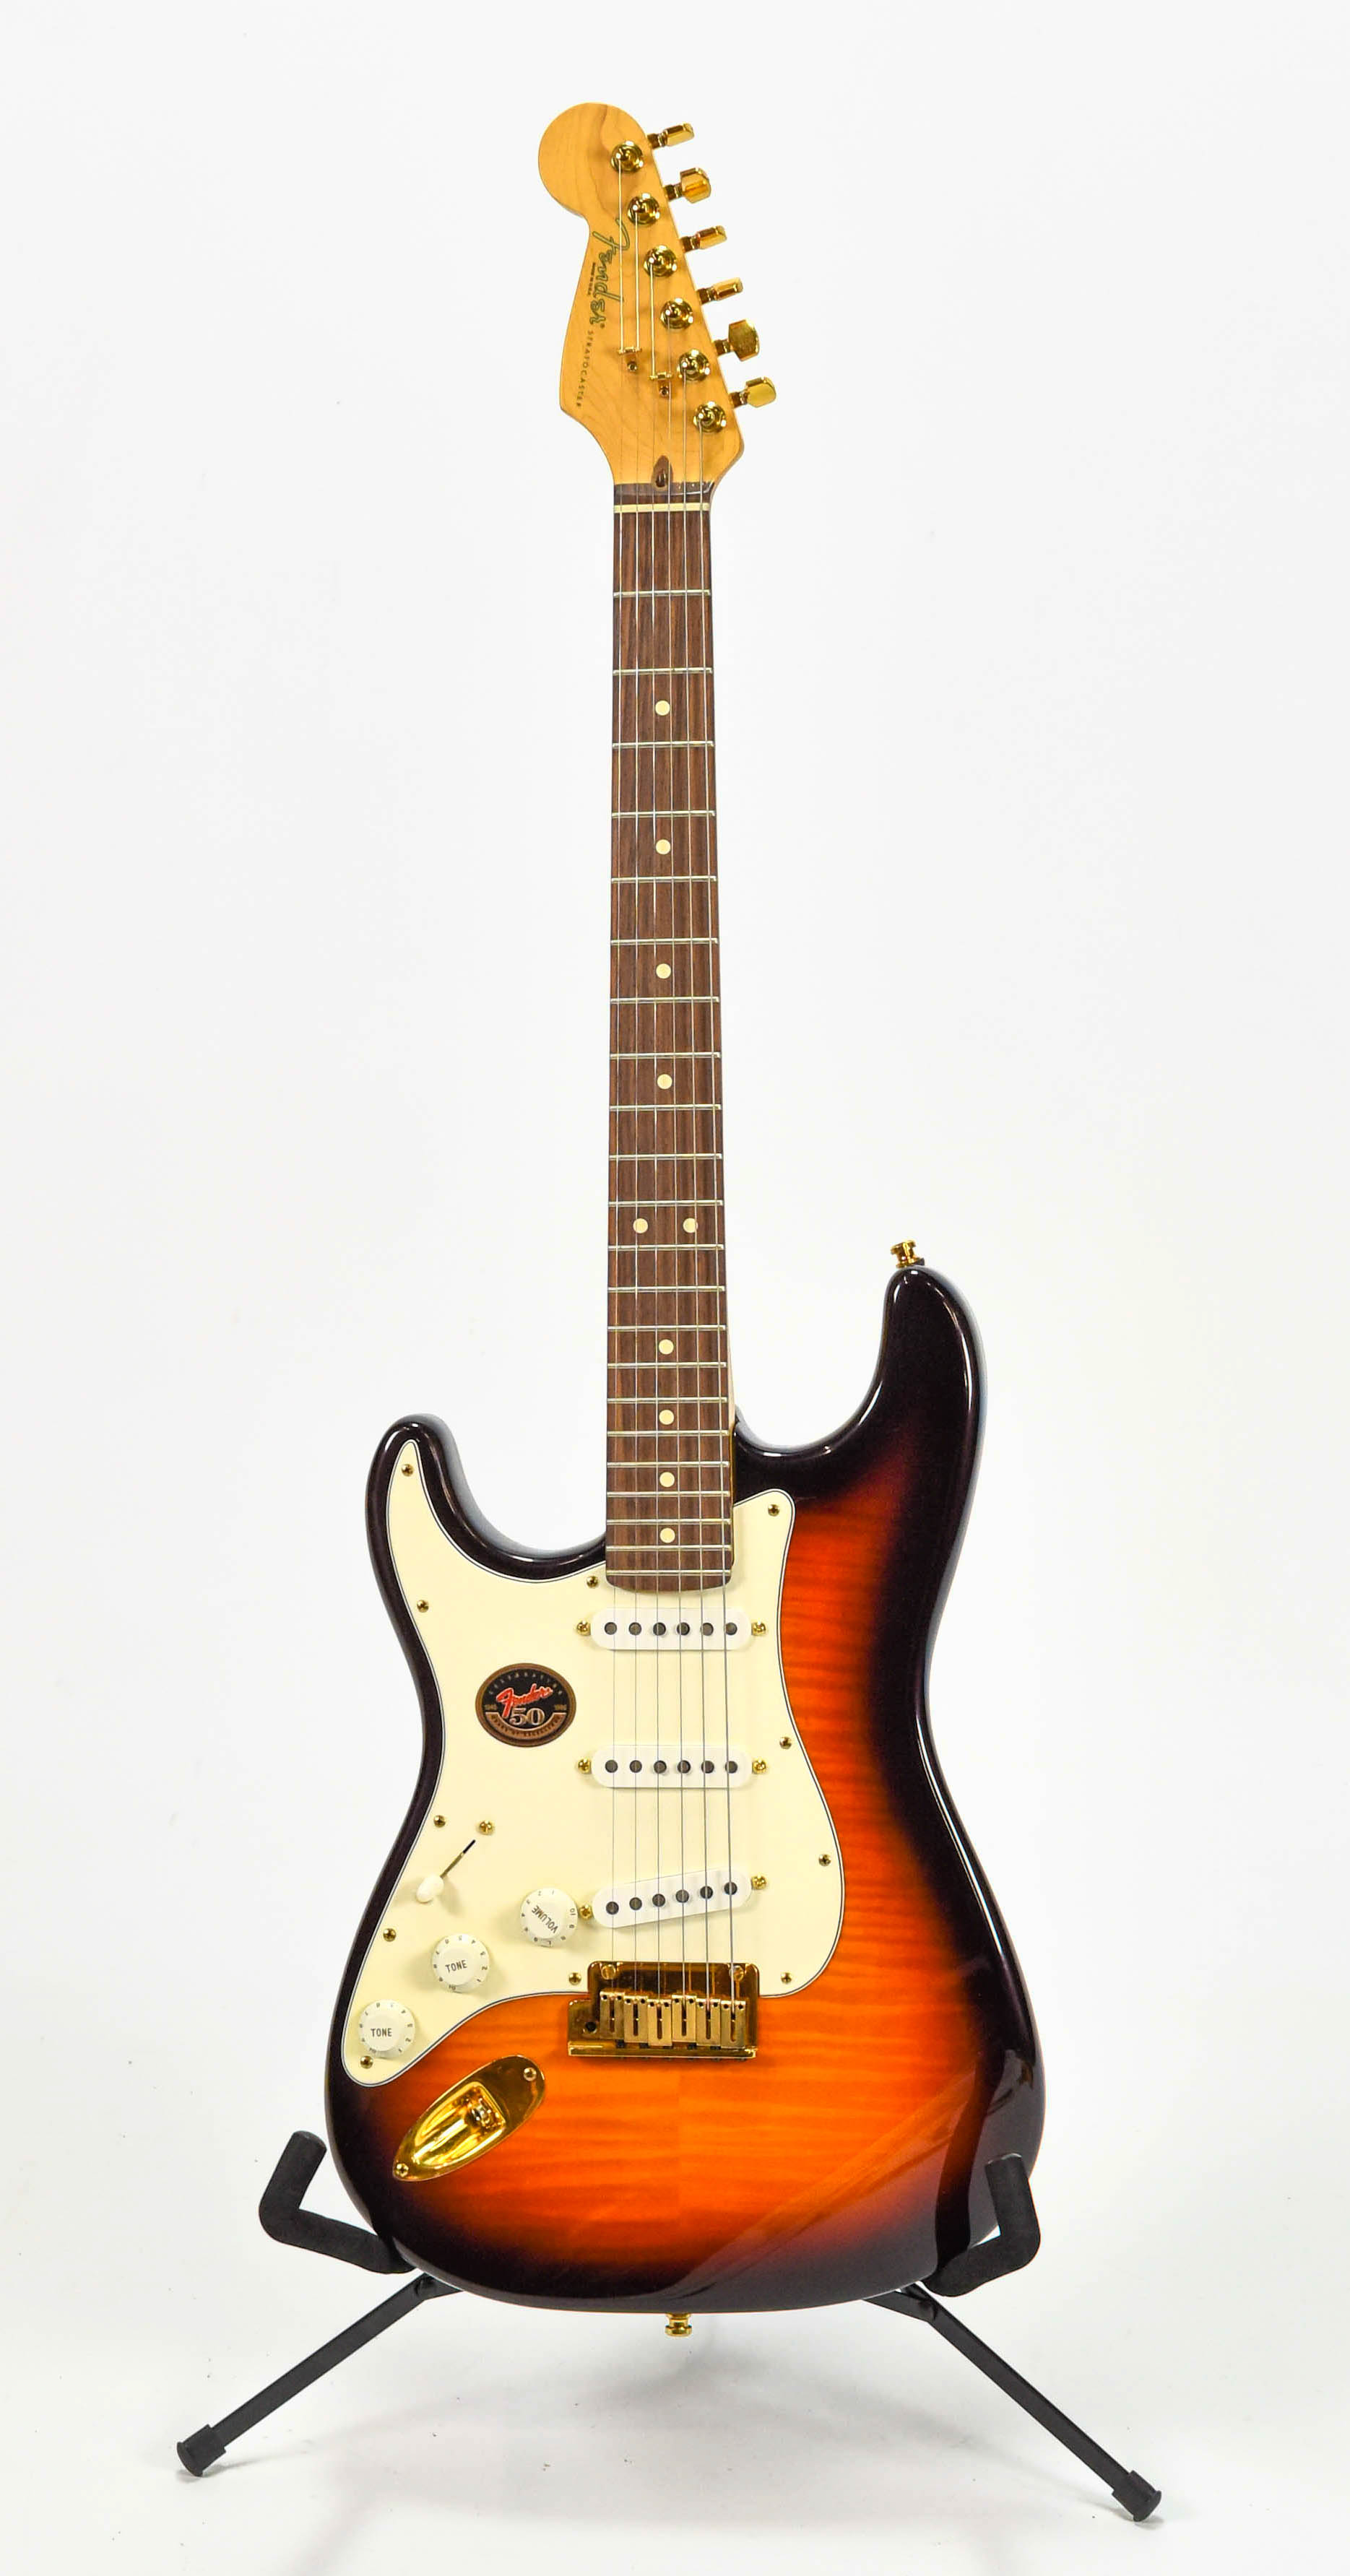 Fender Stratocaster 50th Anniversary USA Guitar